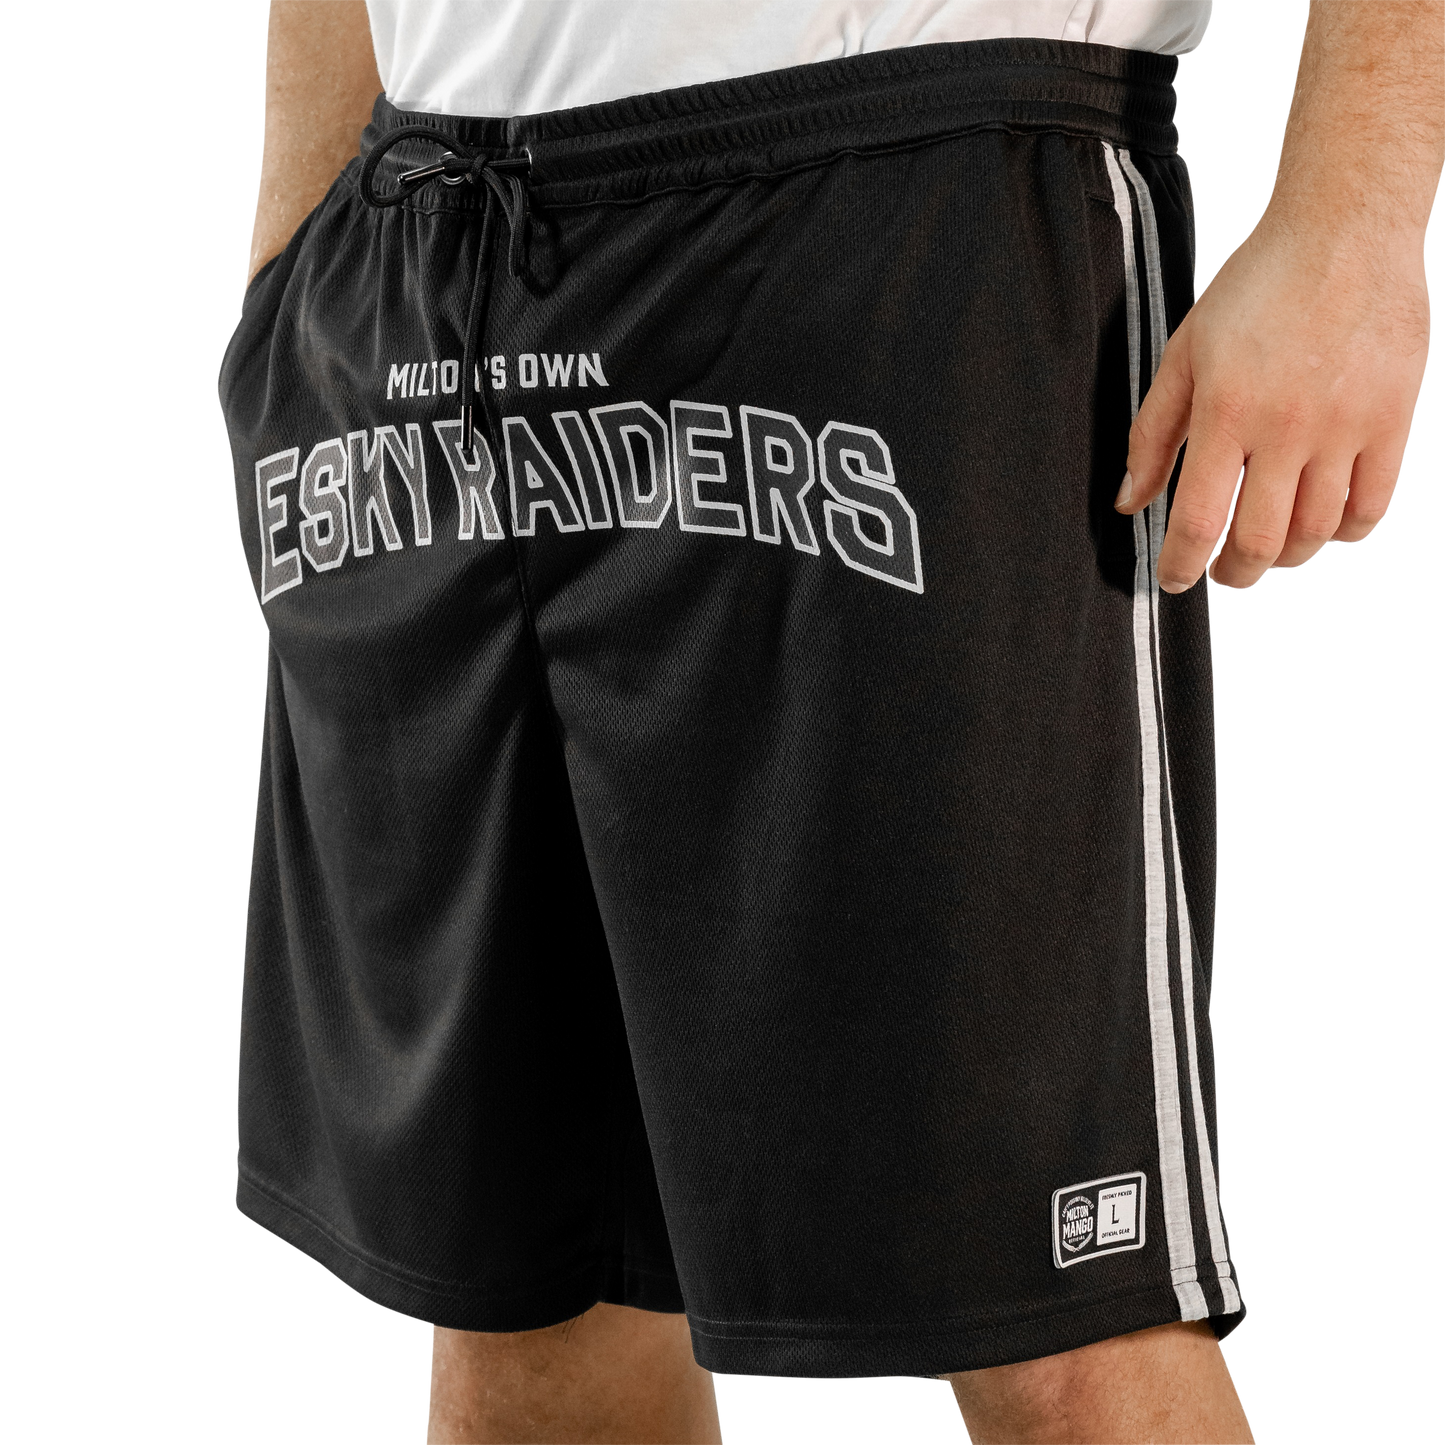 Esky Raiders Basketball Shorts